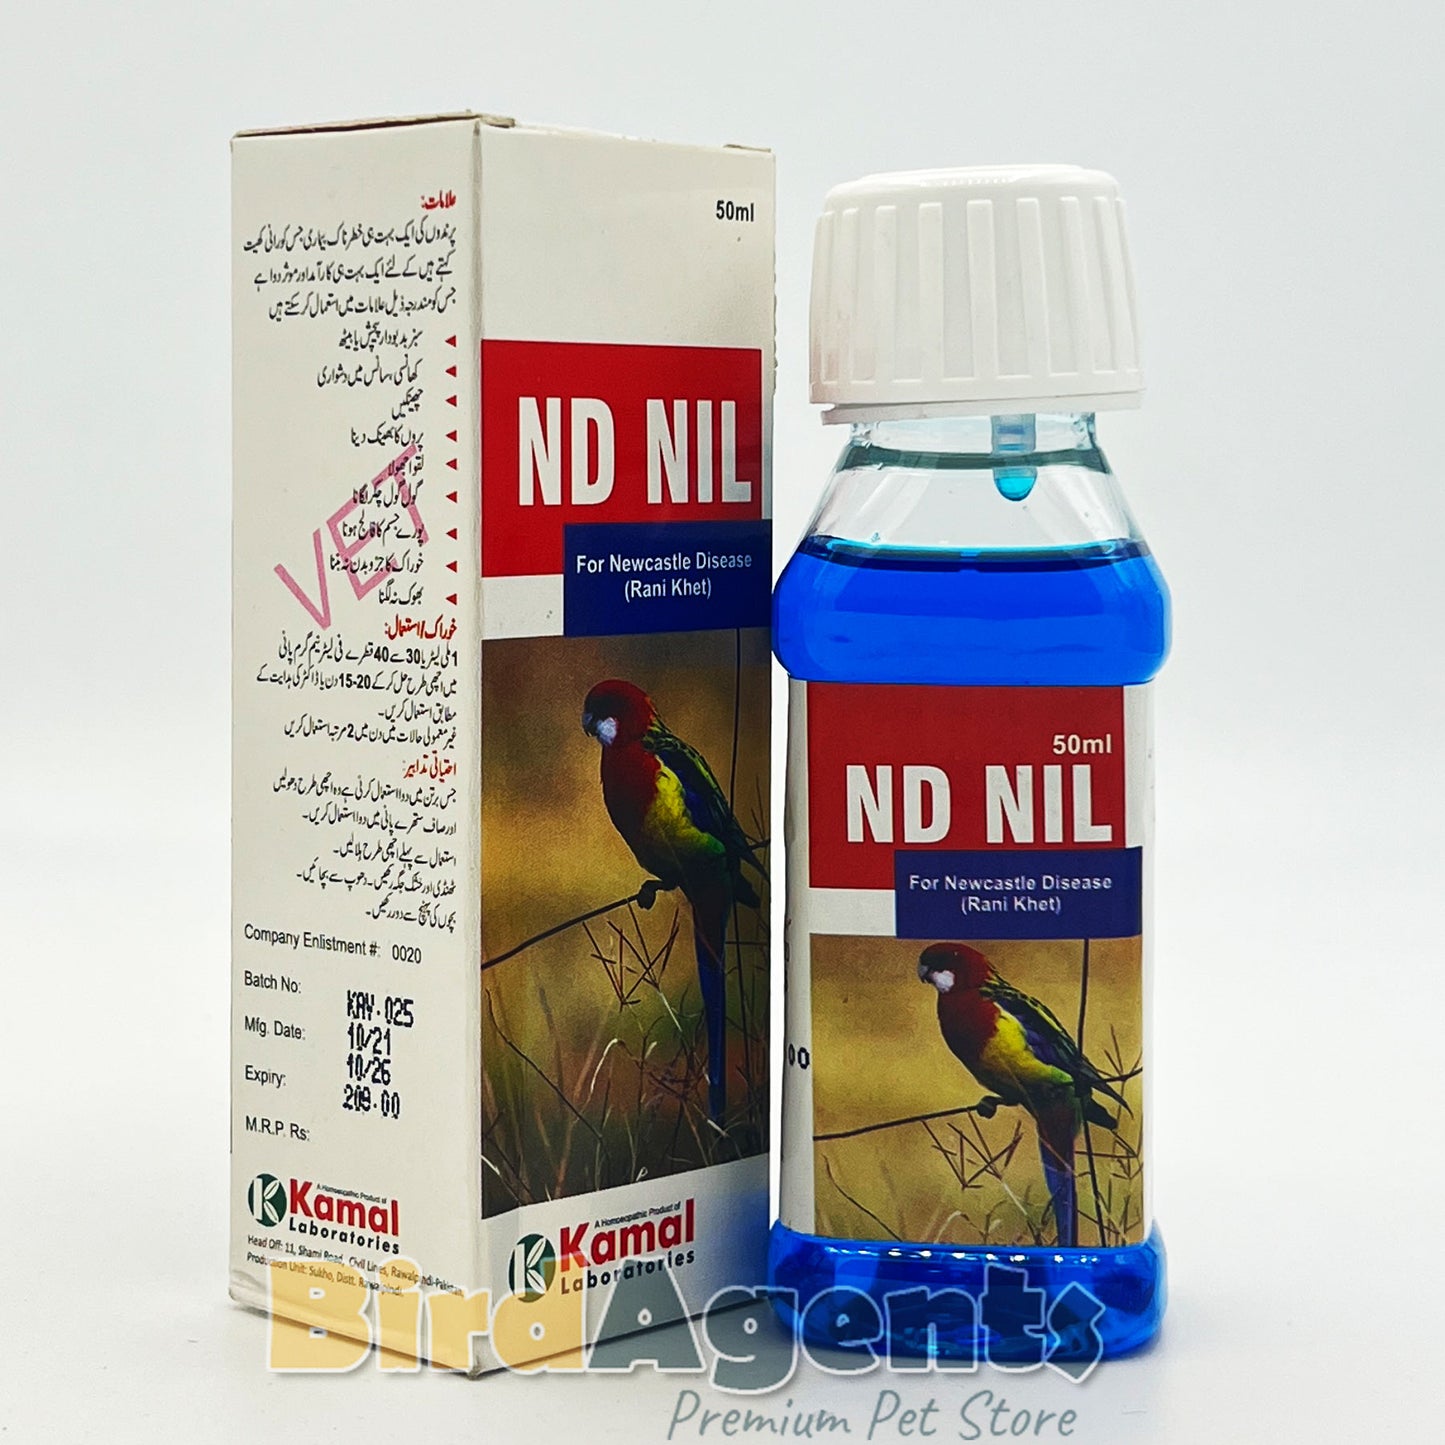 ND NIL (For Newcastle Disease Rani Khet)